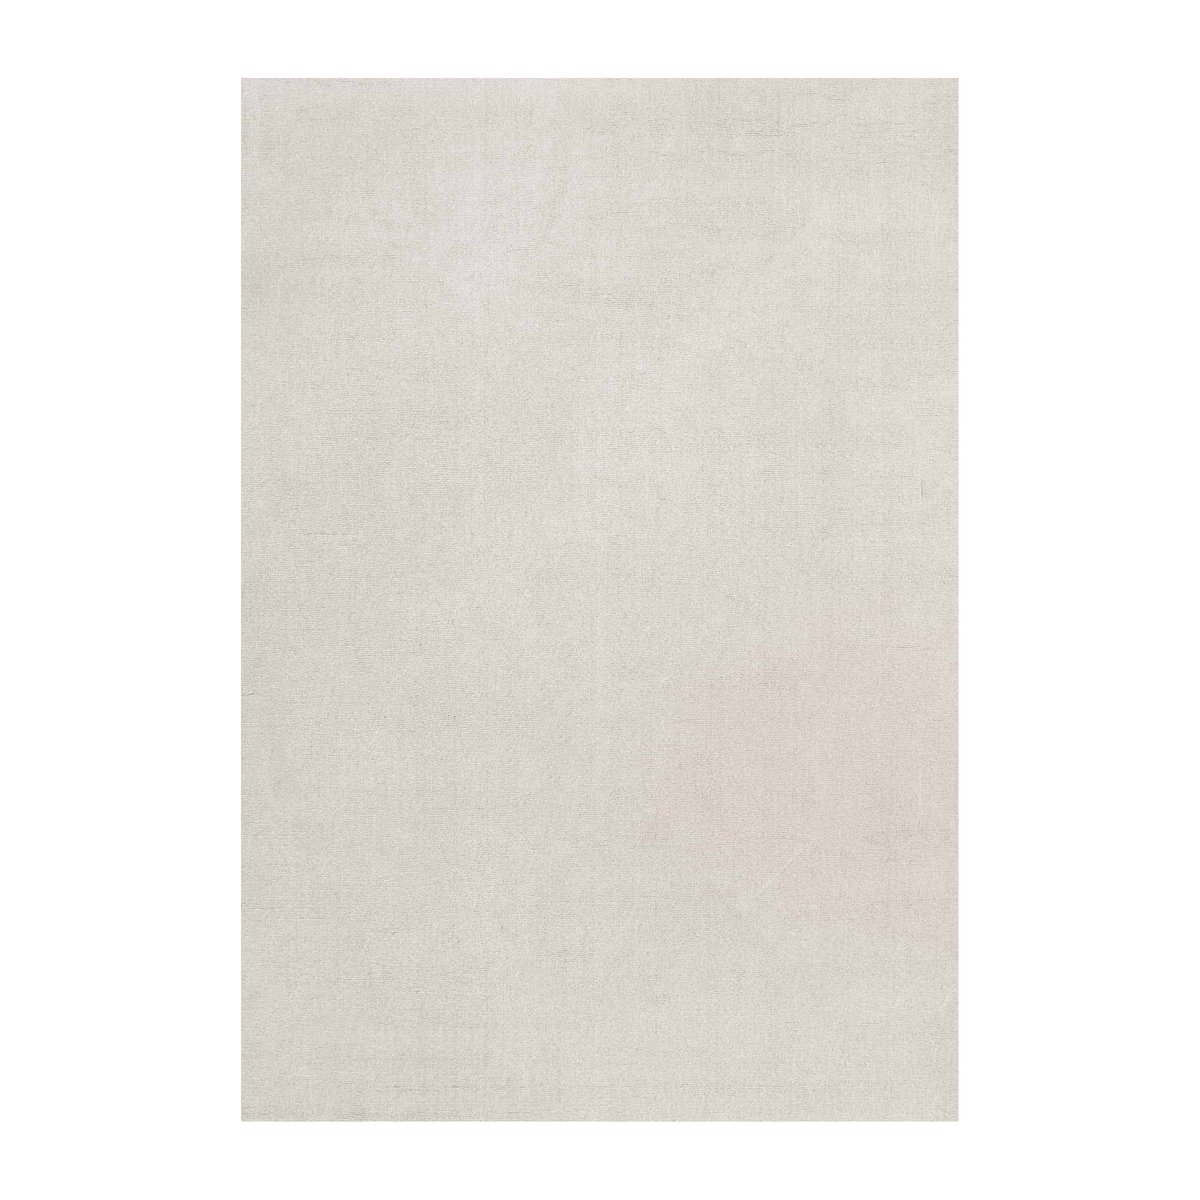 Bilde av Layered Classic solid ullteppe 180 x 270 cm Bone white